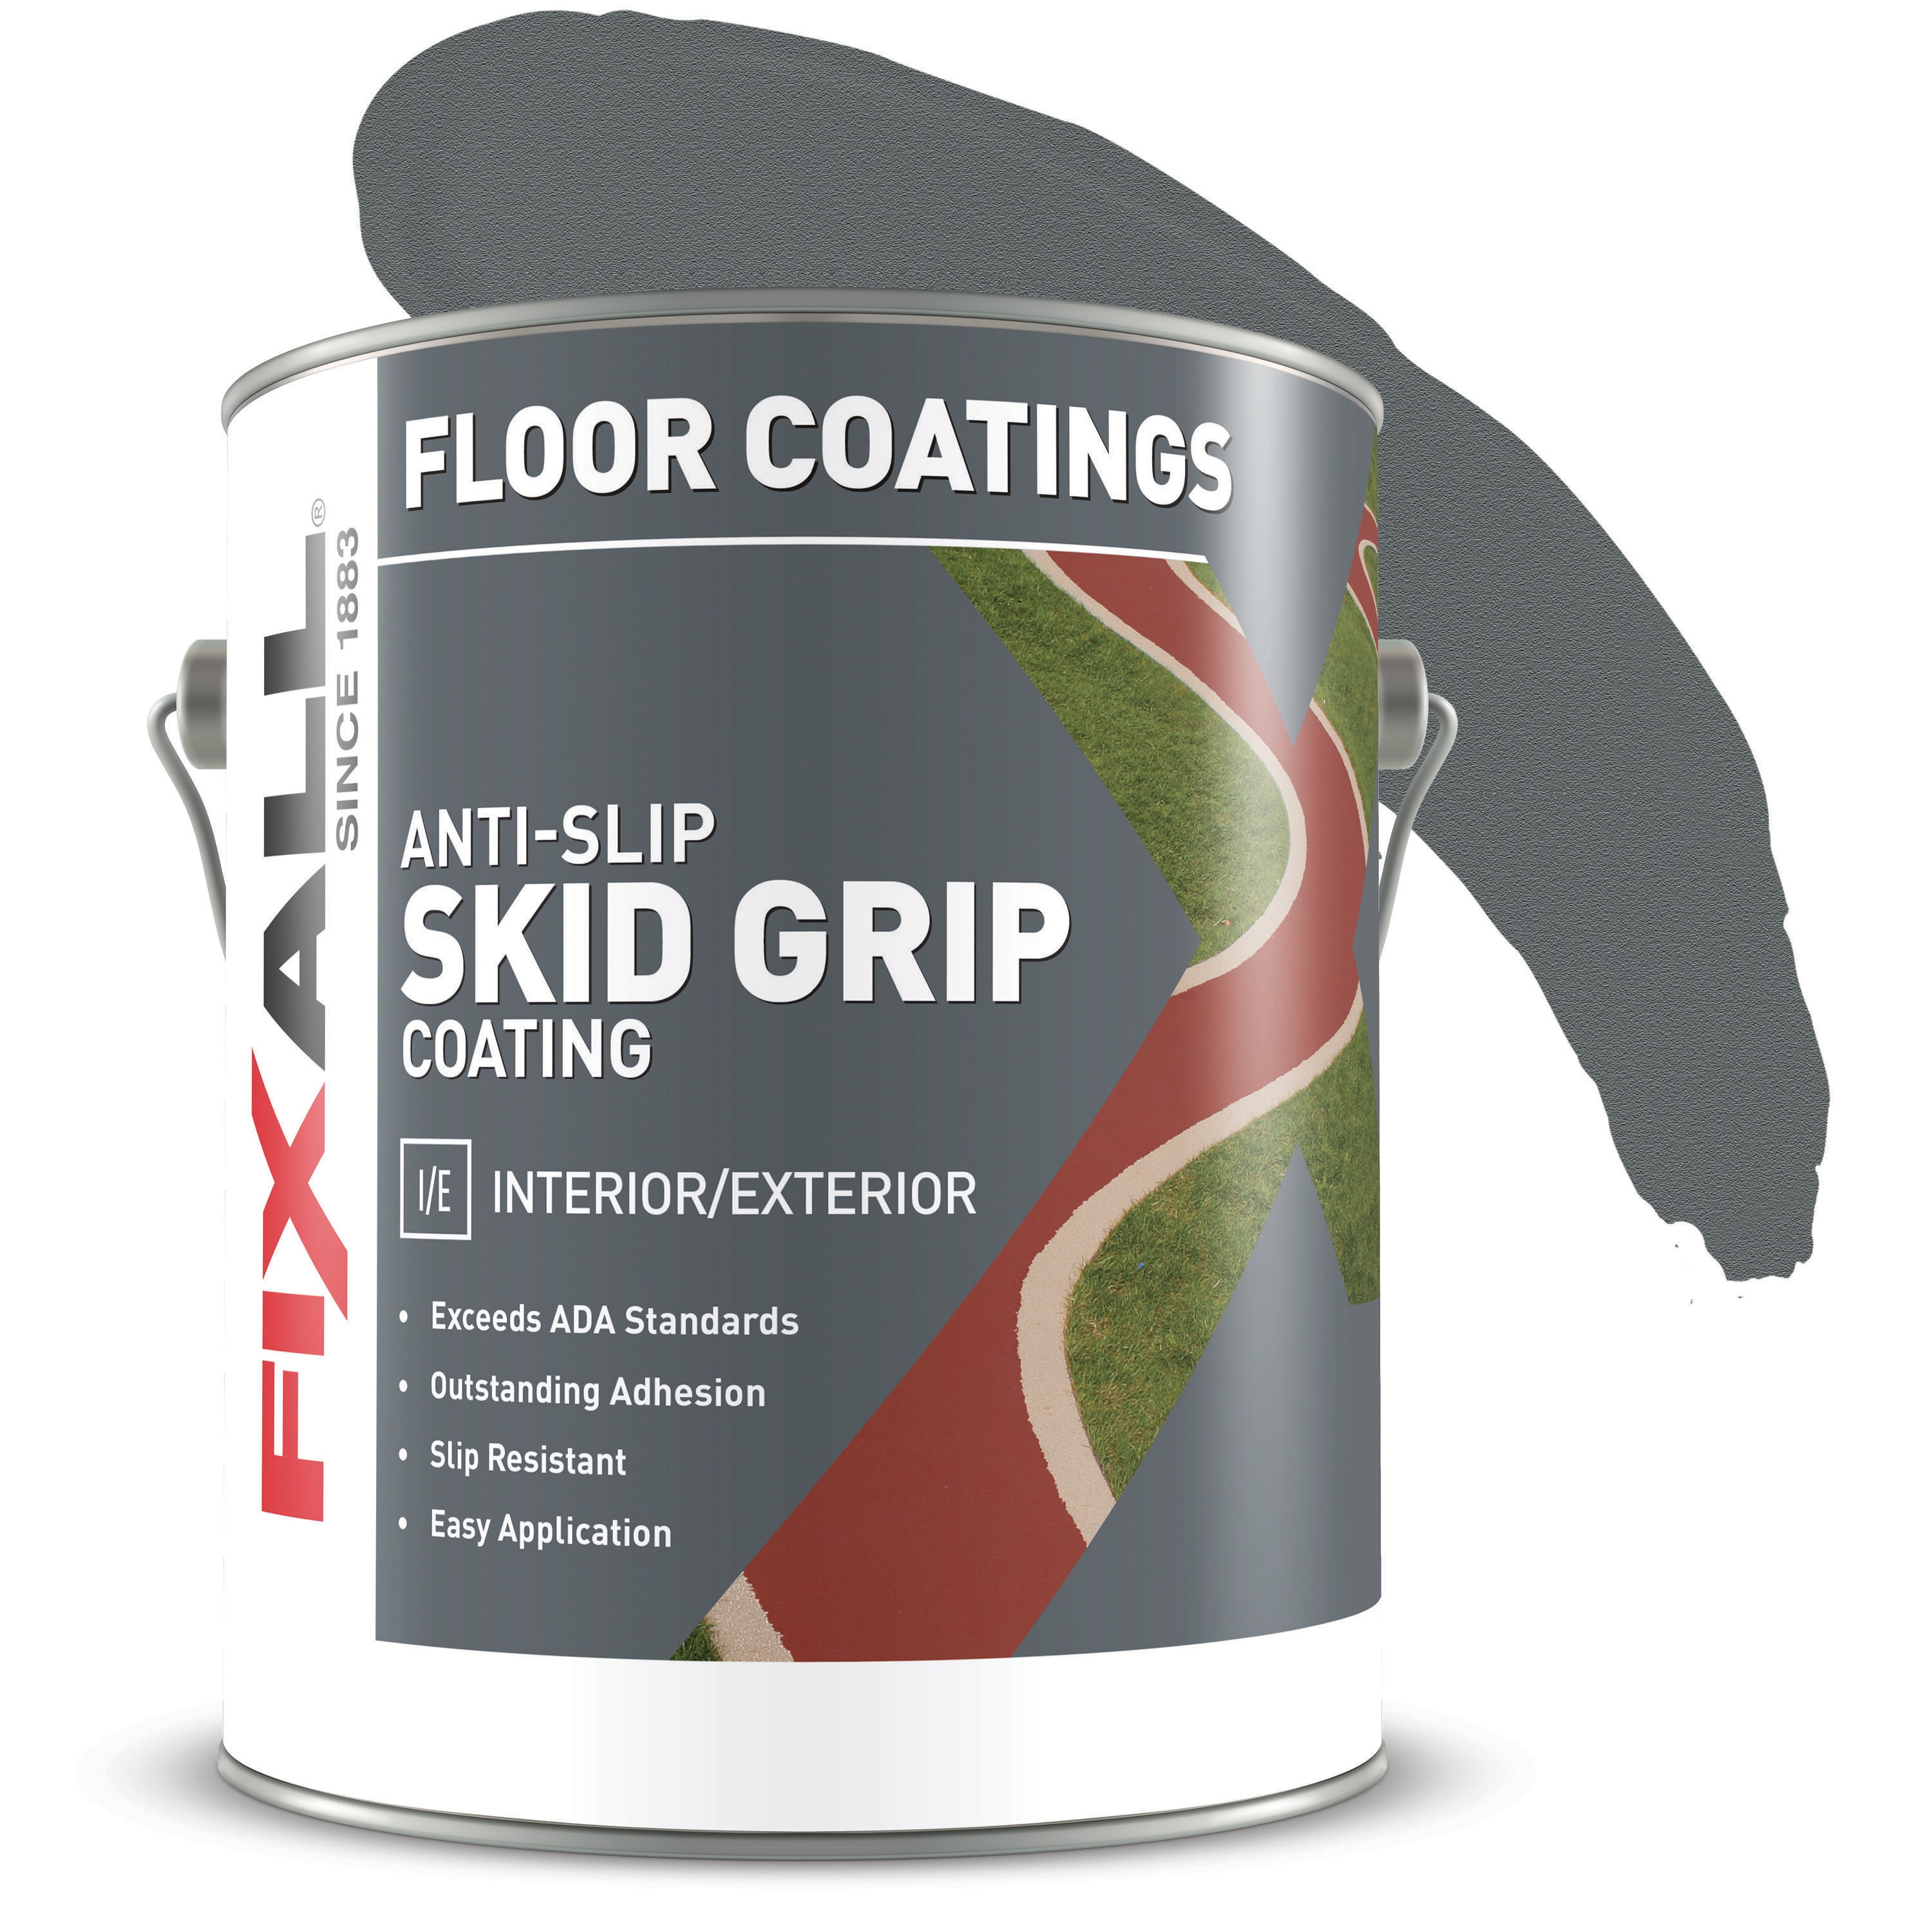 Tuff Grip Anti Slip Paint Coating Light Gray